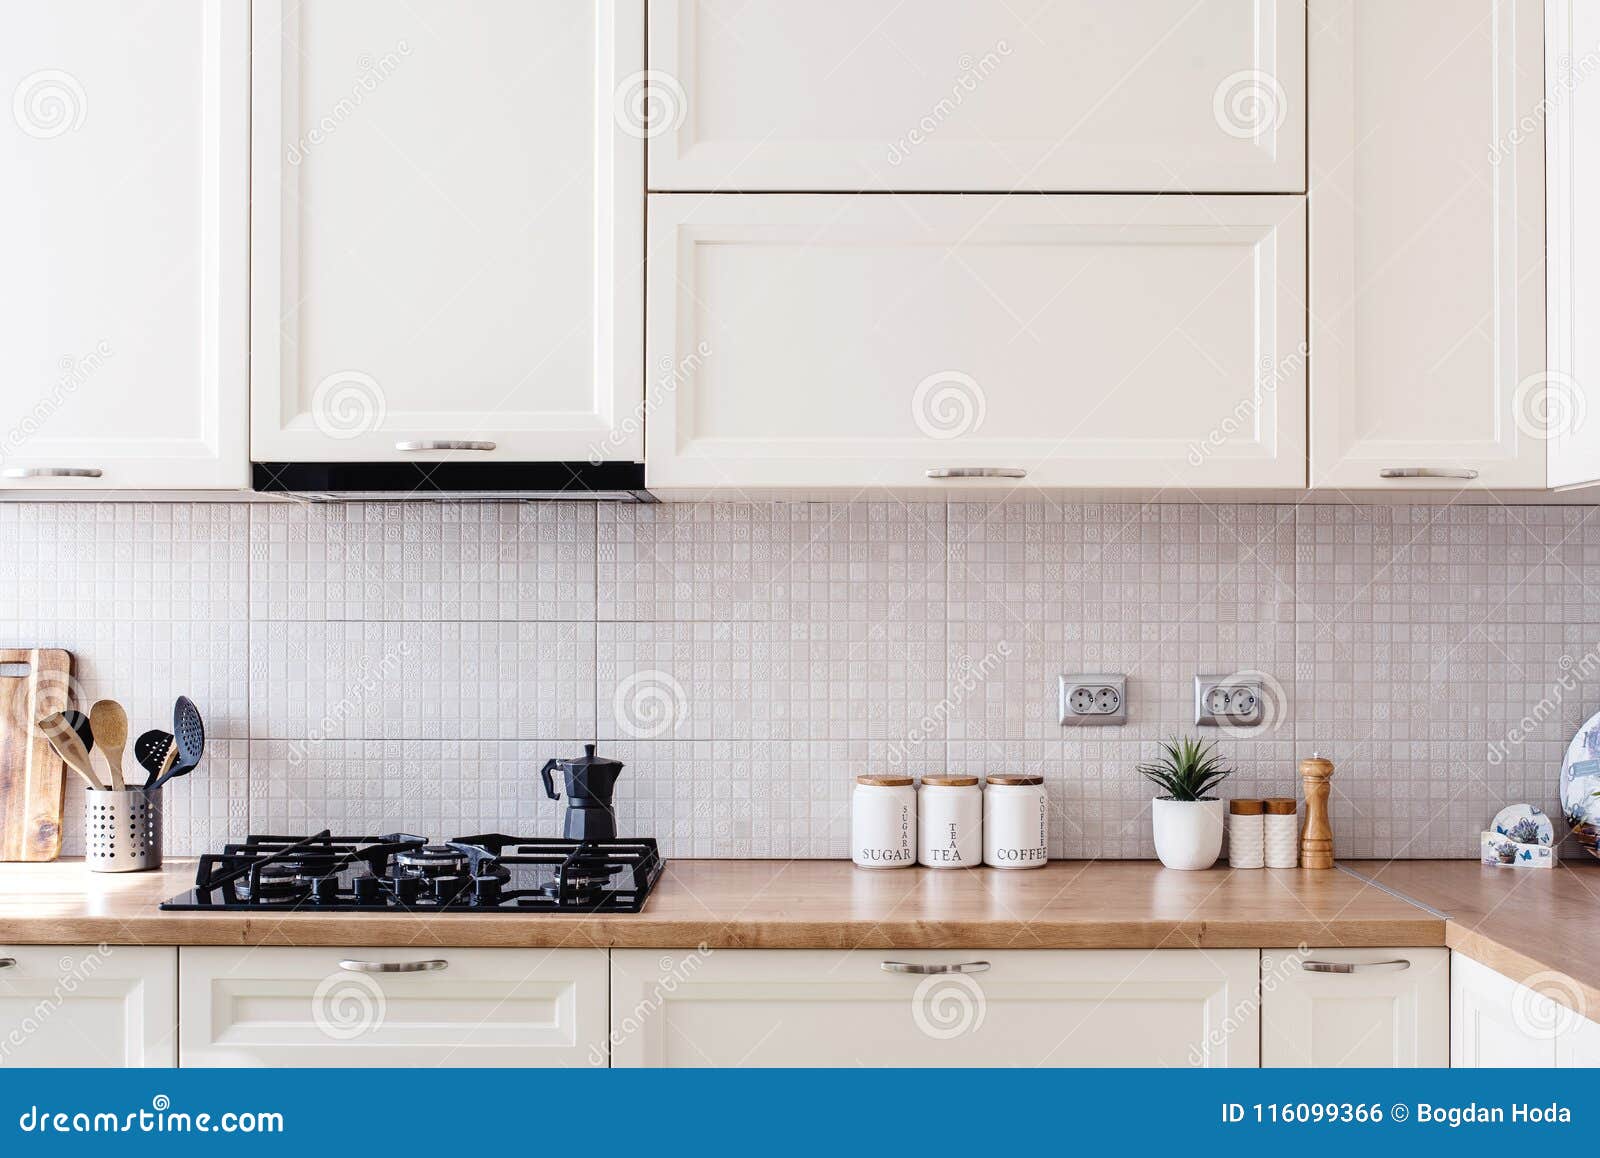 Interior Kitchen Design Details Modern Cabinets And Wooden Furniture Stock Photo Image Of Kitchen Luxury 116099366